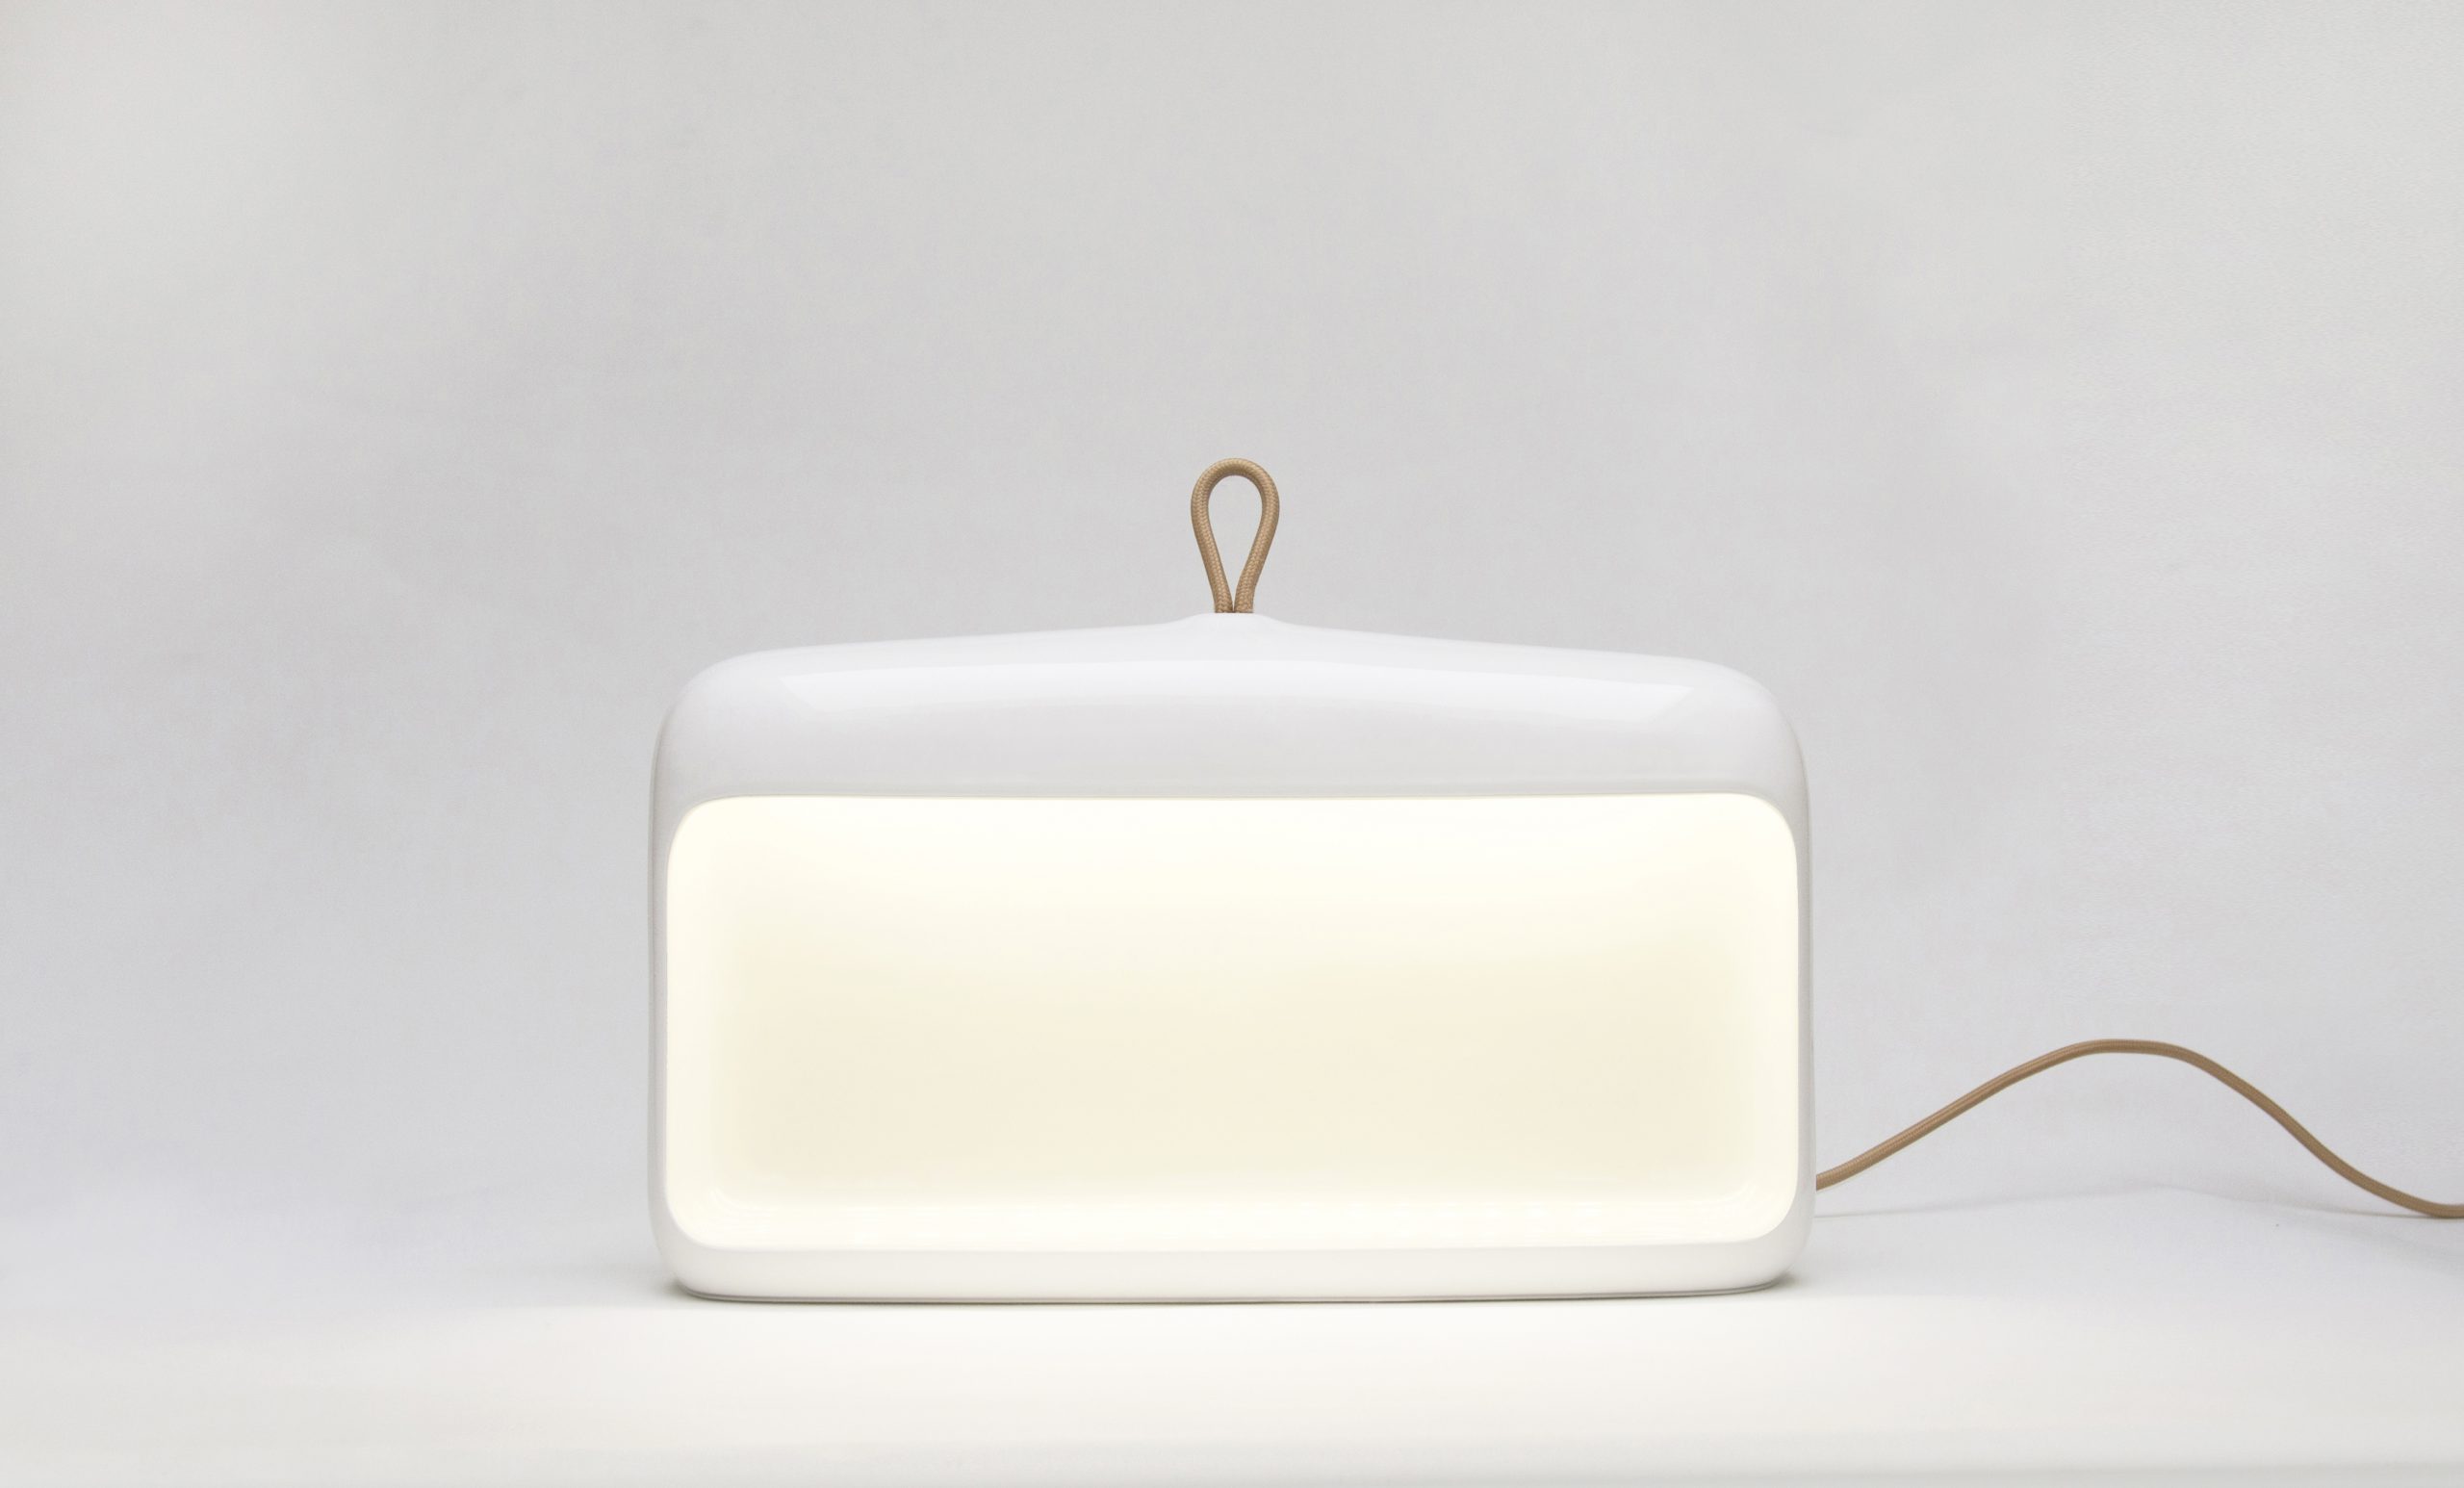 Naica ceramic lamp by Debiasi Sandri for Ligne Roset